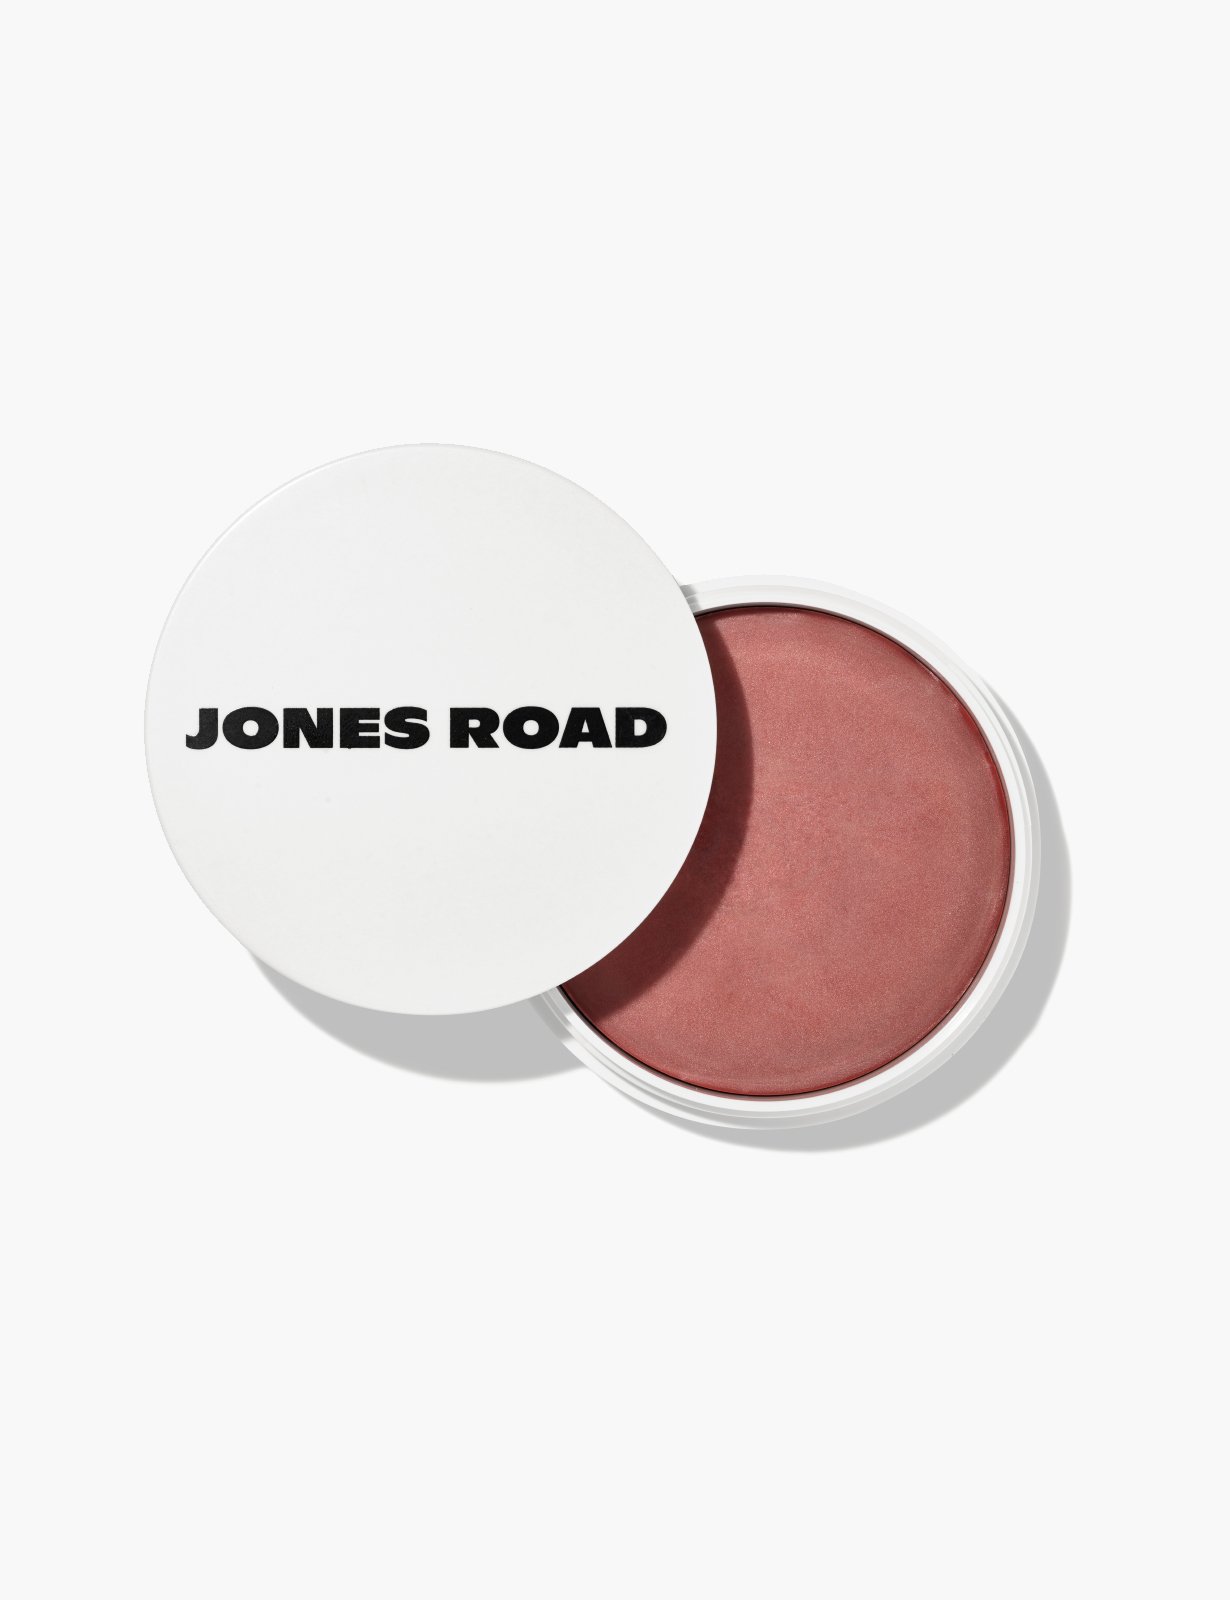 Jones Road Miracle Balm in Dusty Rose